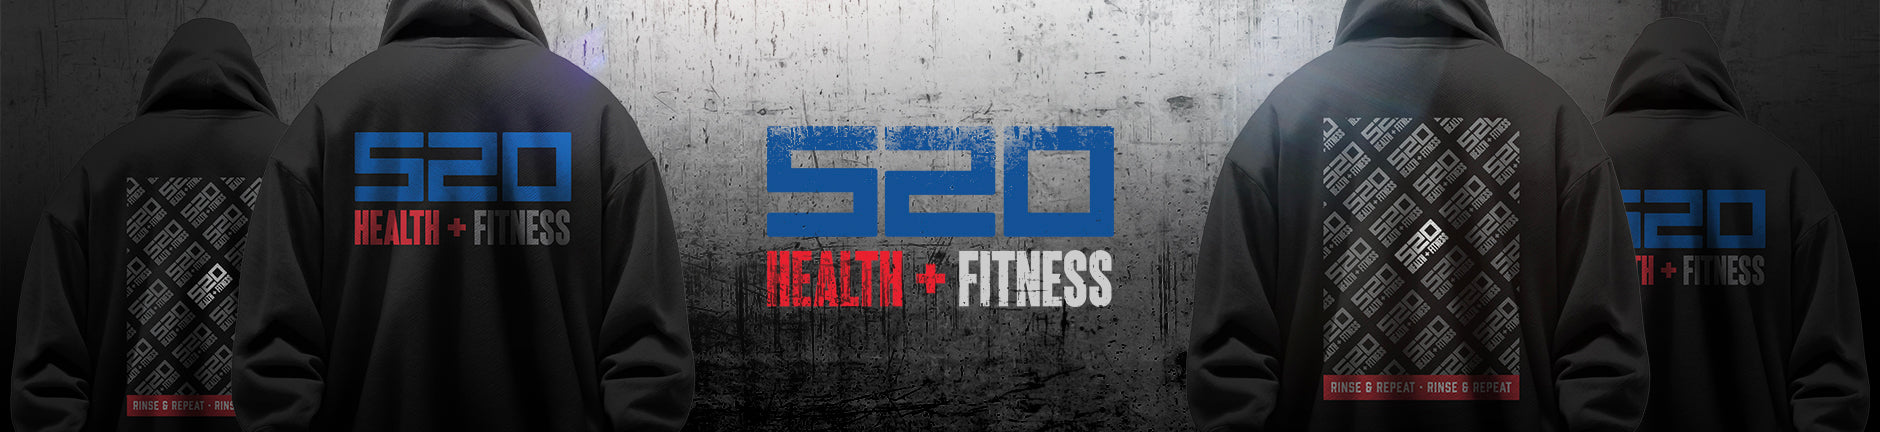 S20 Health & Fitness